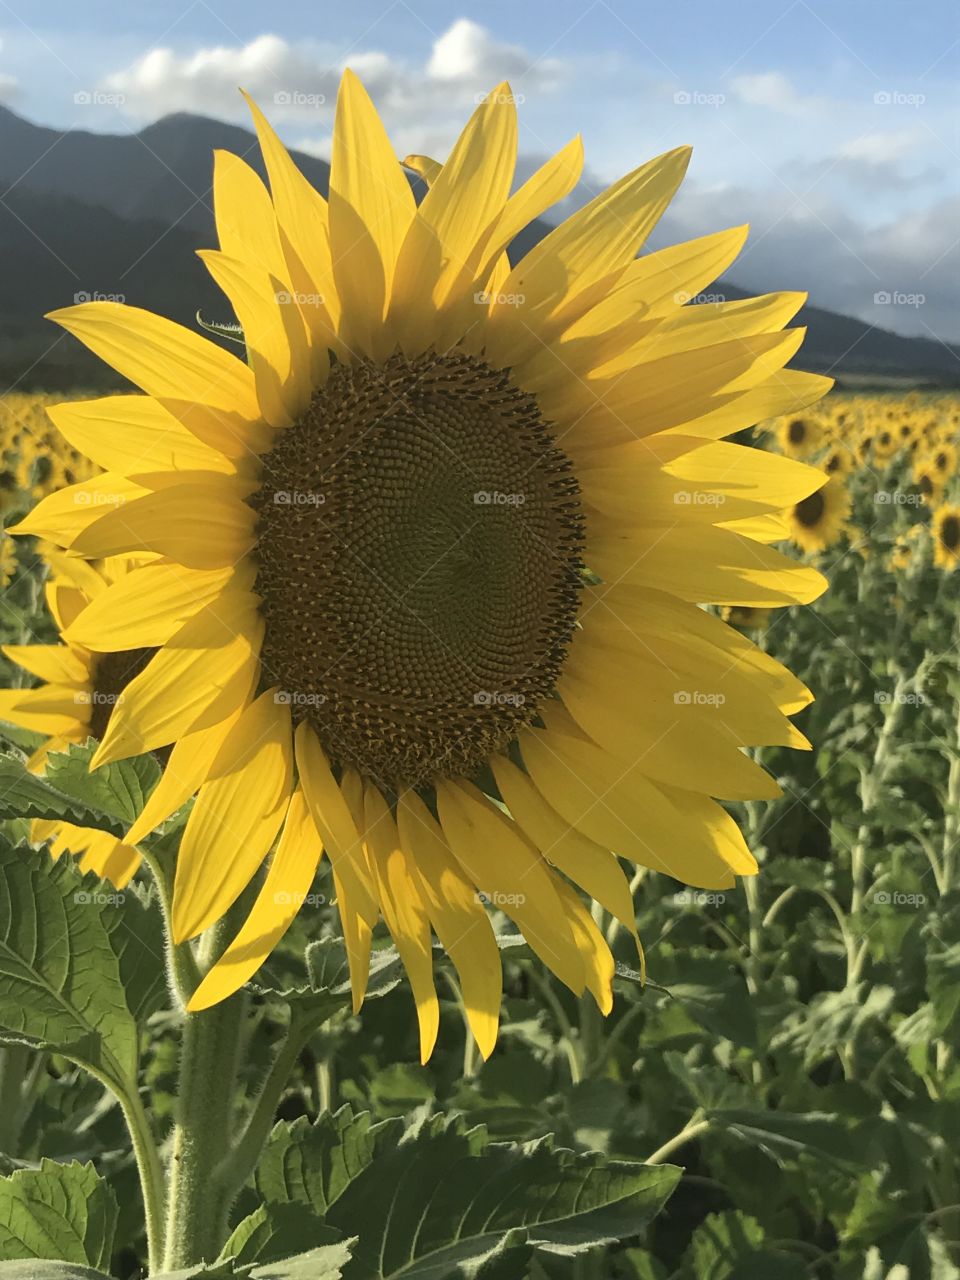 Up close Sunflower photo